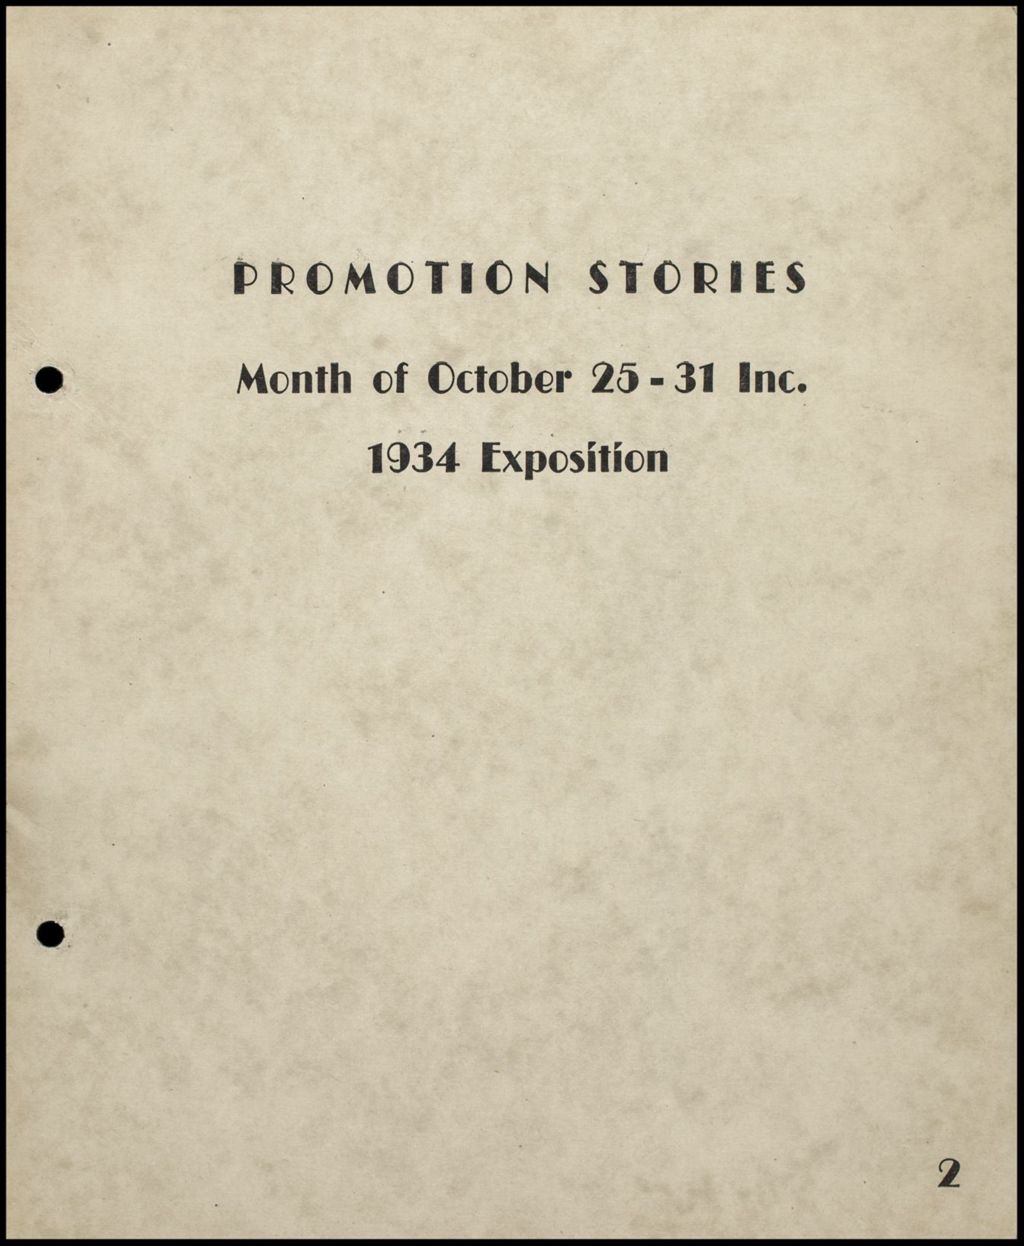 Miniature of Promotion Stories, October 1934 (Folder 14-130)